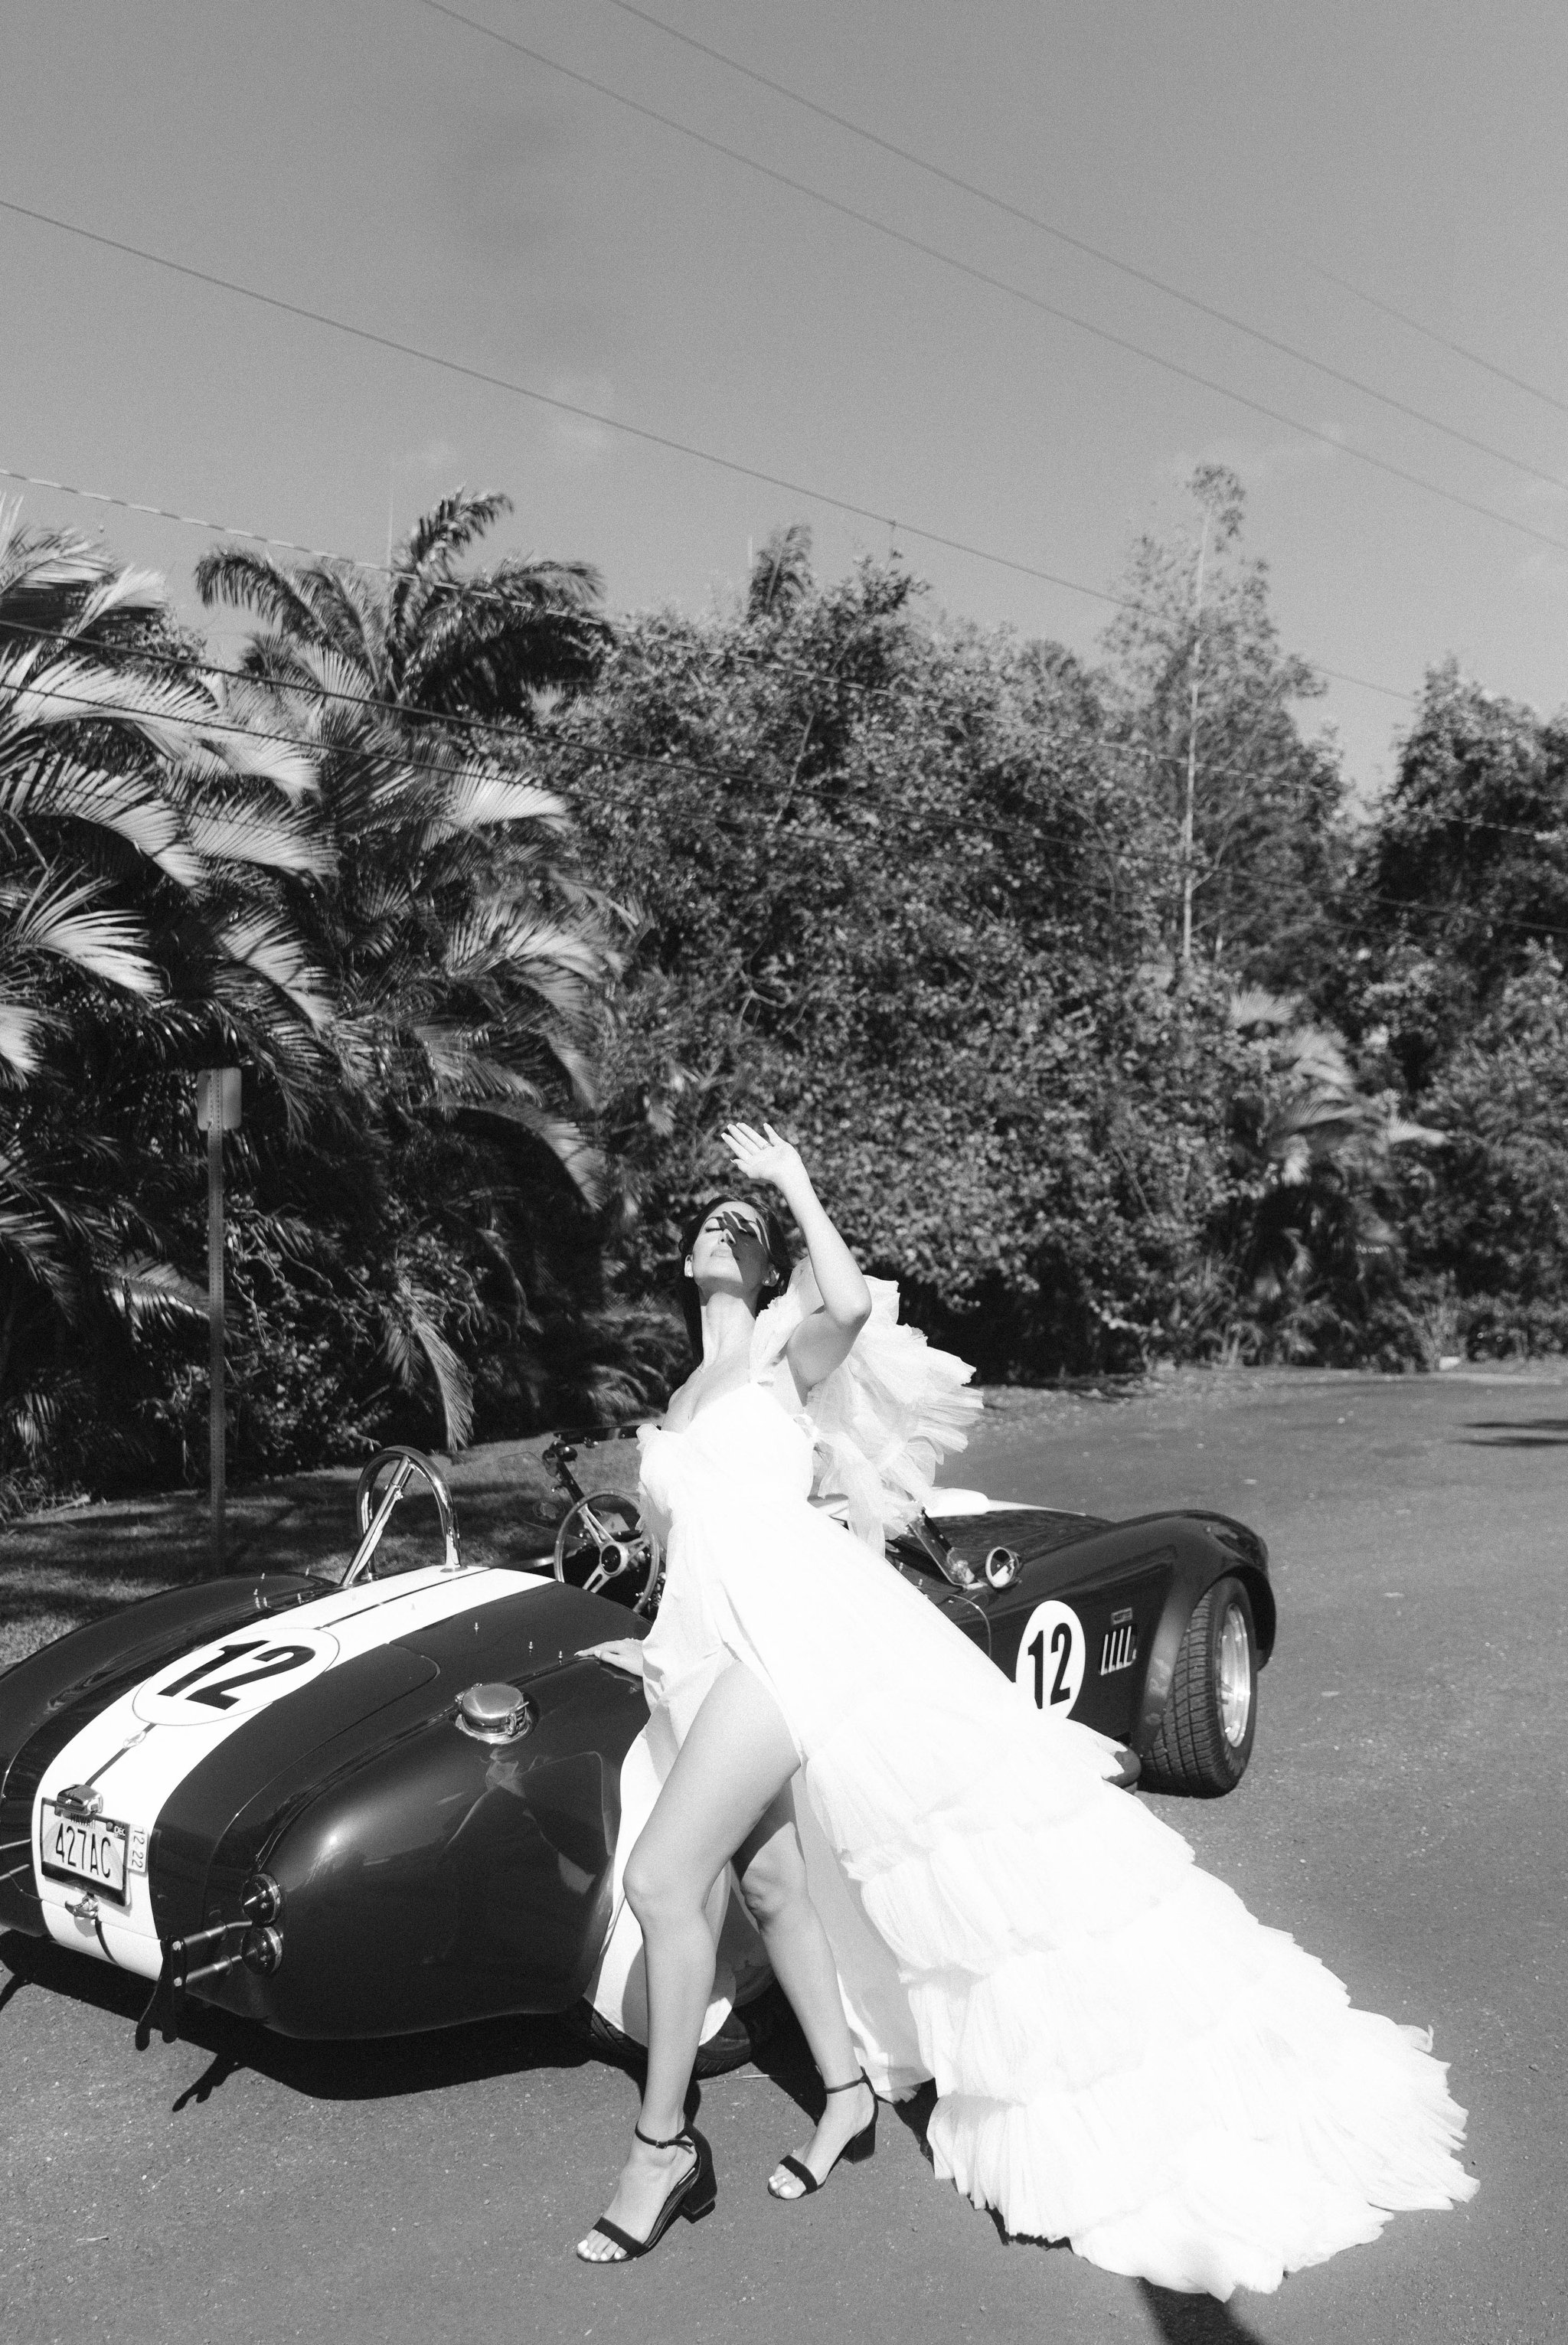 Luxury Wedding Inspiration at an Orchard - The Farm at Kaimea Estates - Oahu, Hawaii Photographer